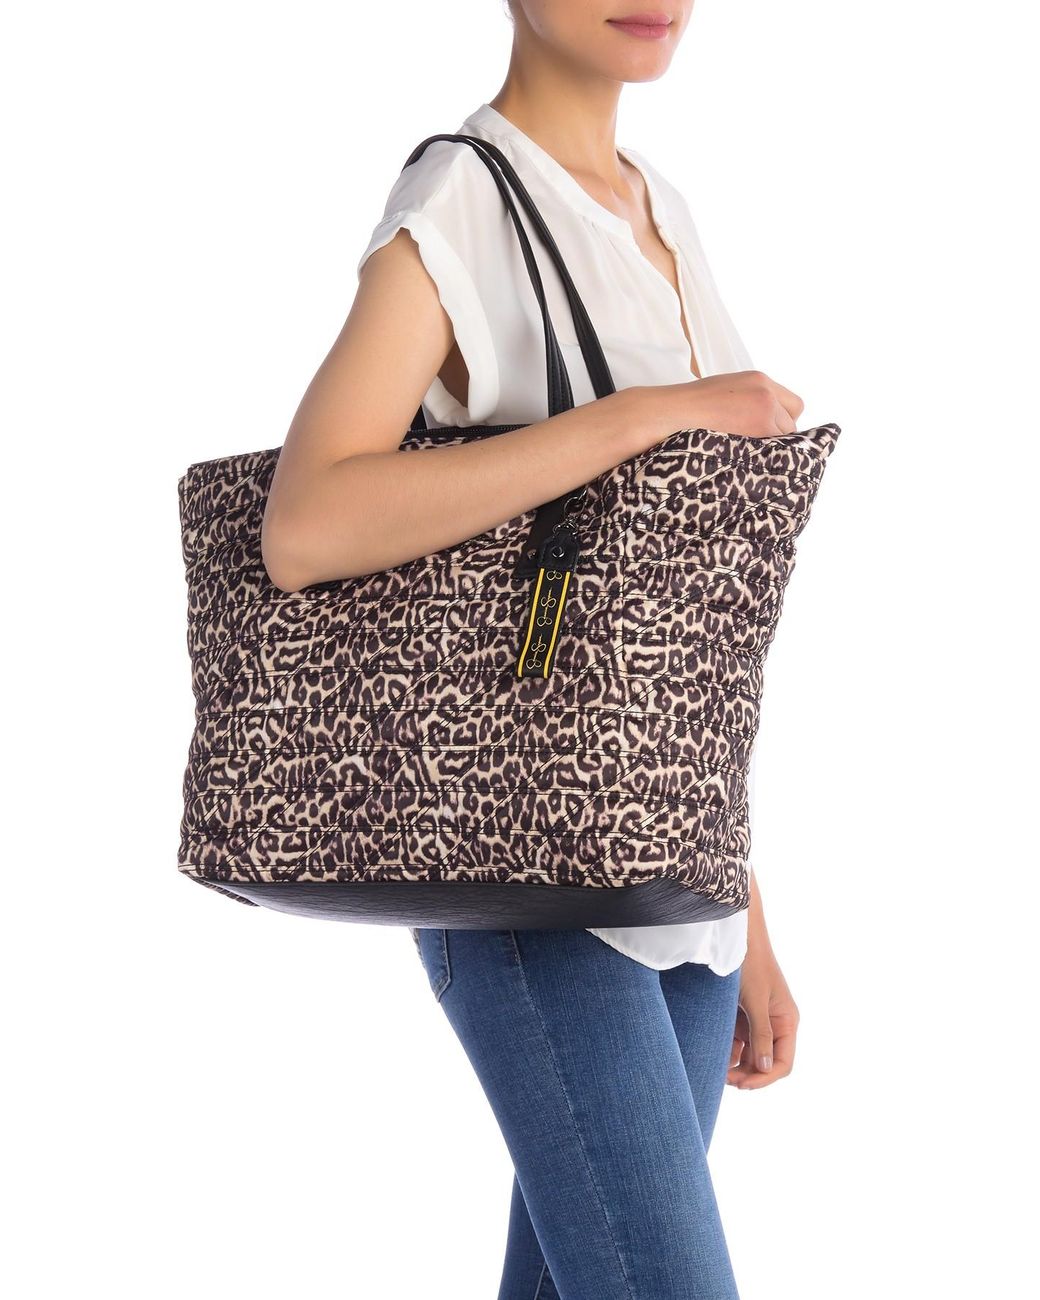 Jessica Simpson | Bags | Jessica Simpson Logan Black Polka Dot Handbag |  Poshmark